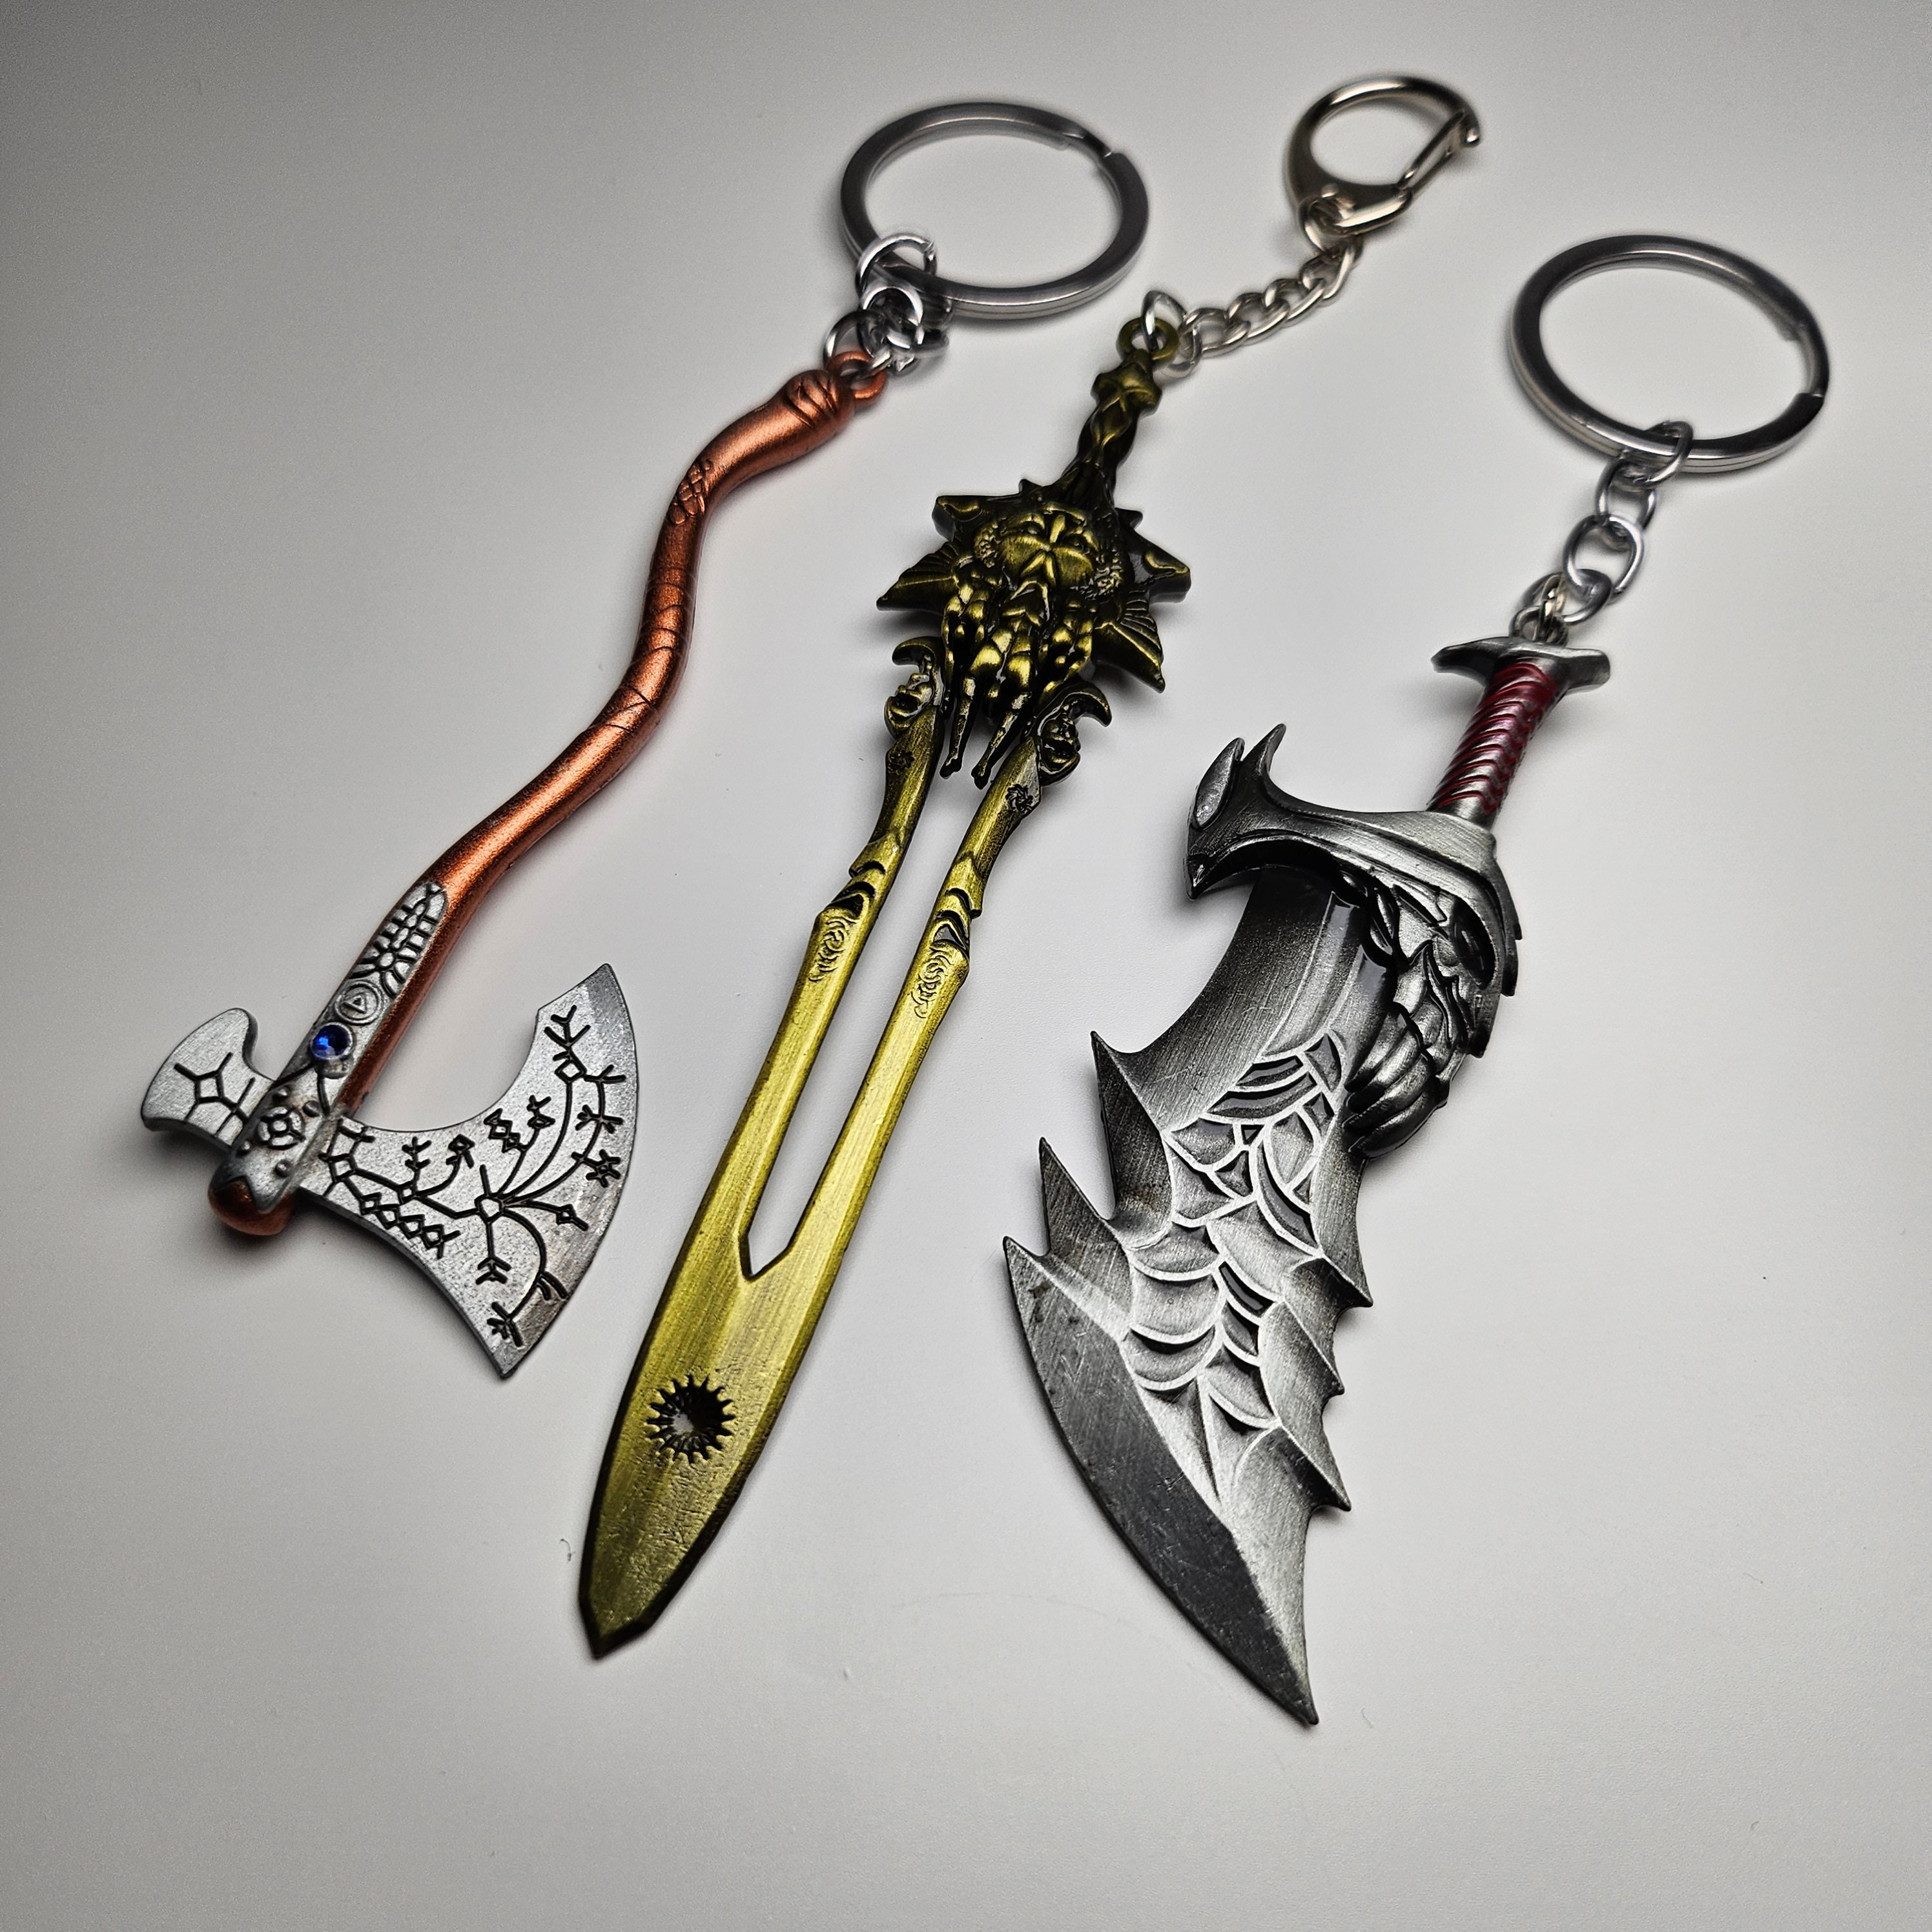 20cm Blade of Olympus God of War 2 Kratos Metal Sword Replica Miniatures  Game Peripheral 1/6 Doll Equipment Accessories Ornament